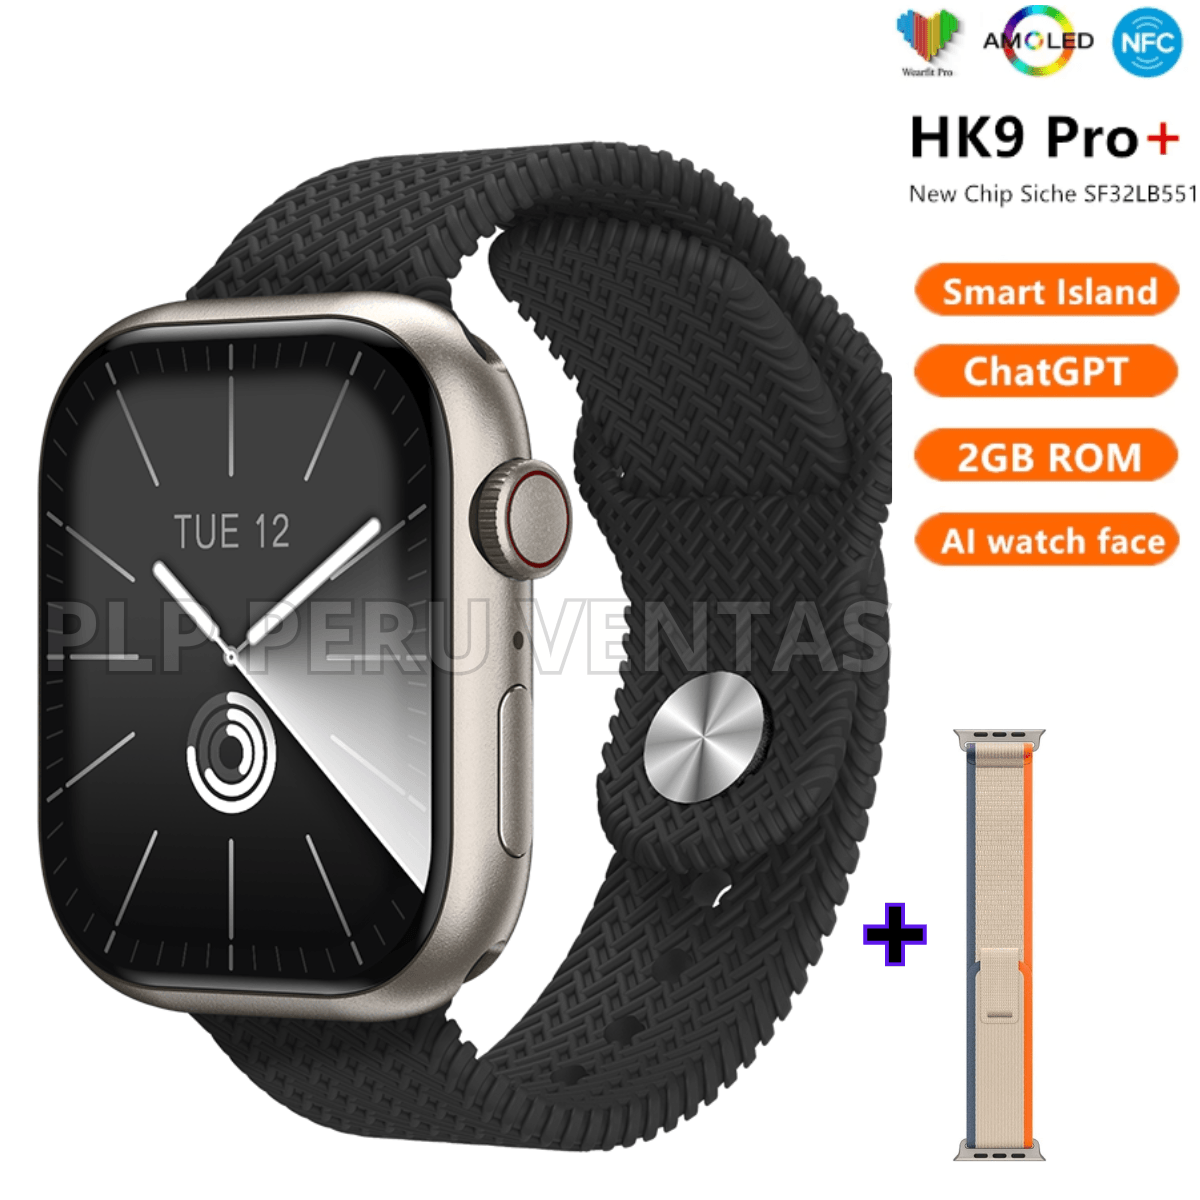 Smartwatch Hk9 Pro Plus 2GB 3Generacion Chat GPT Amoled Negro